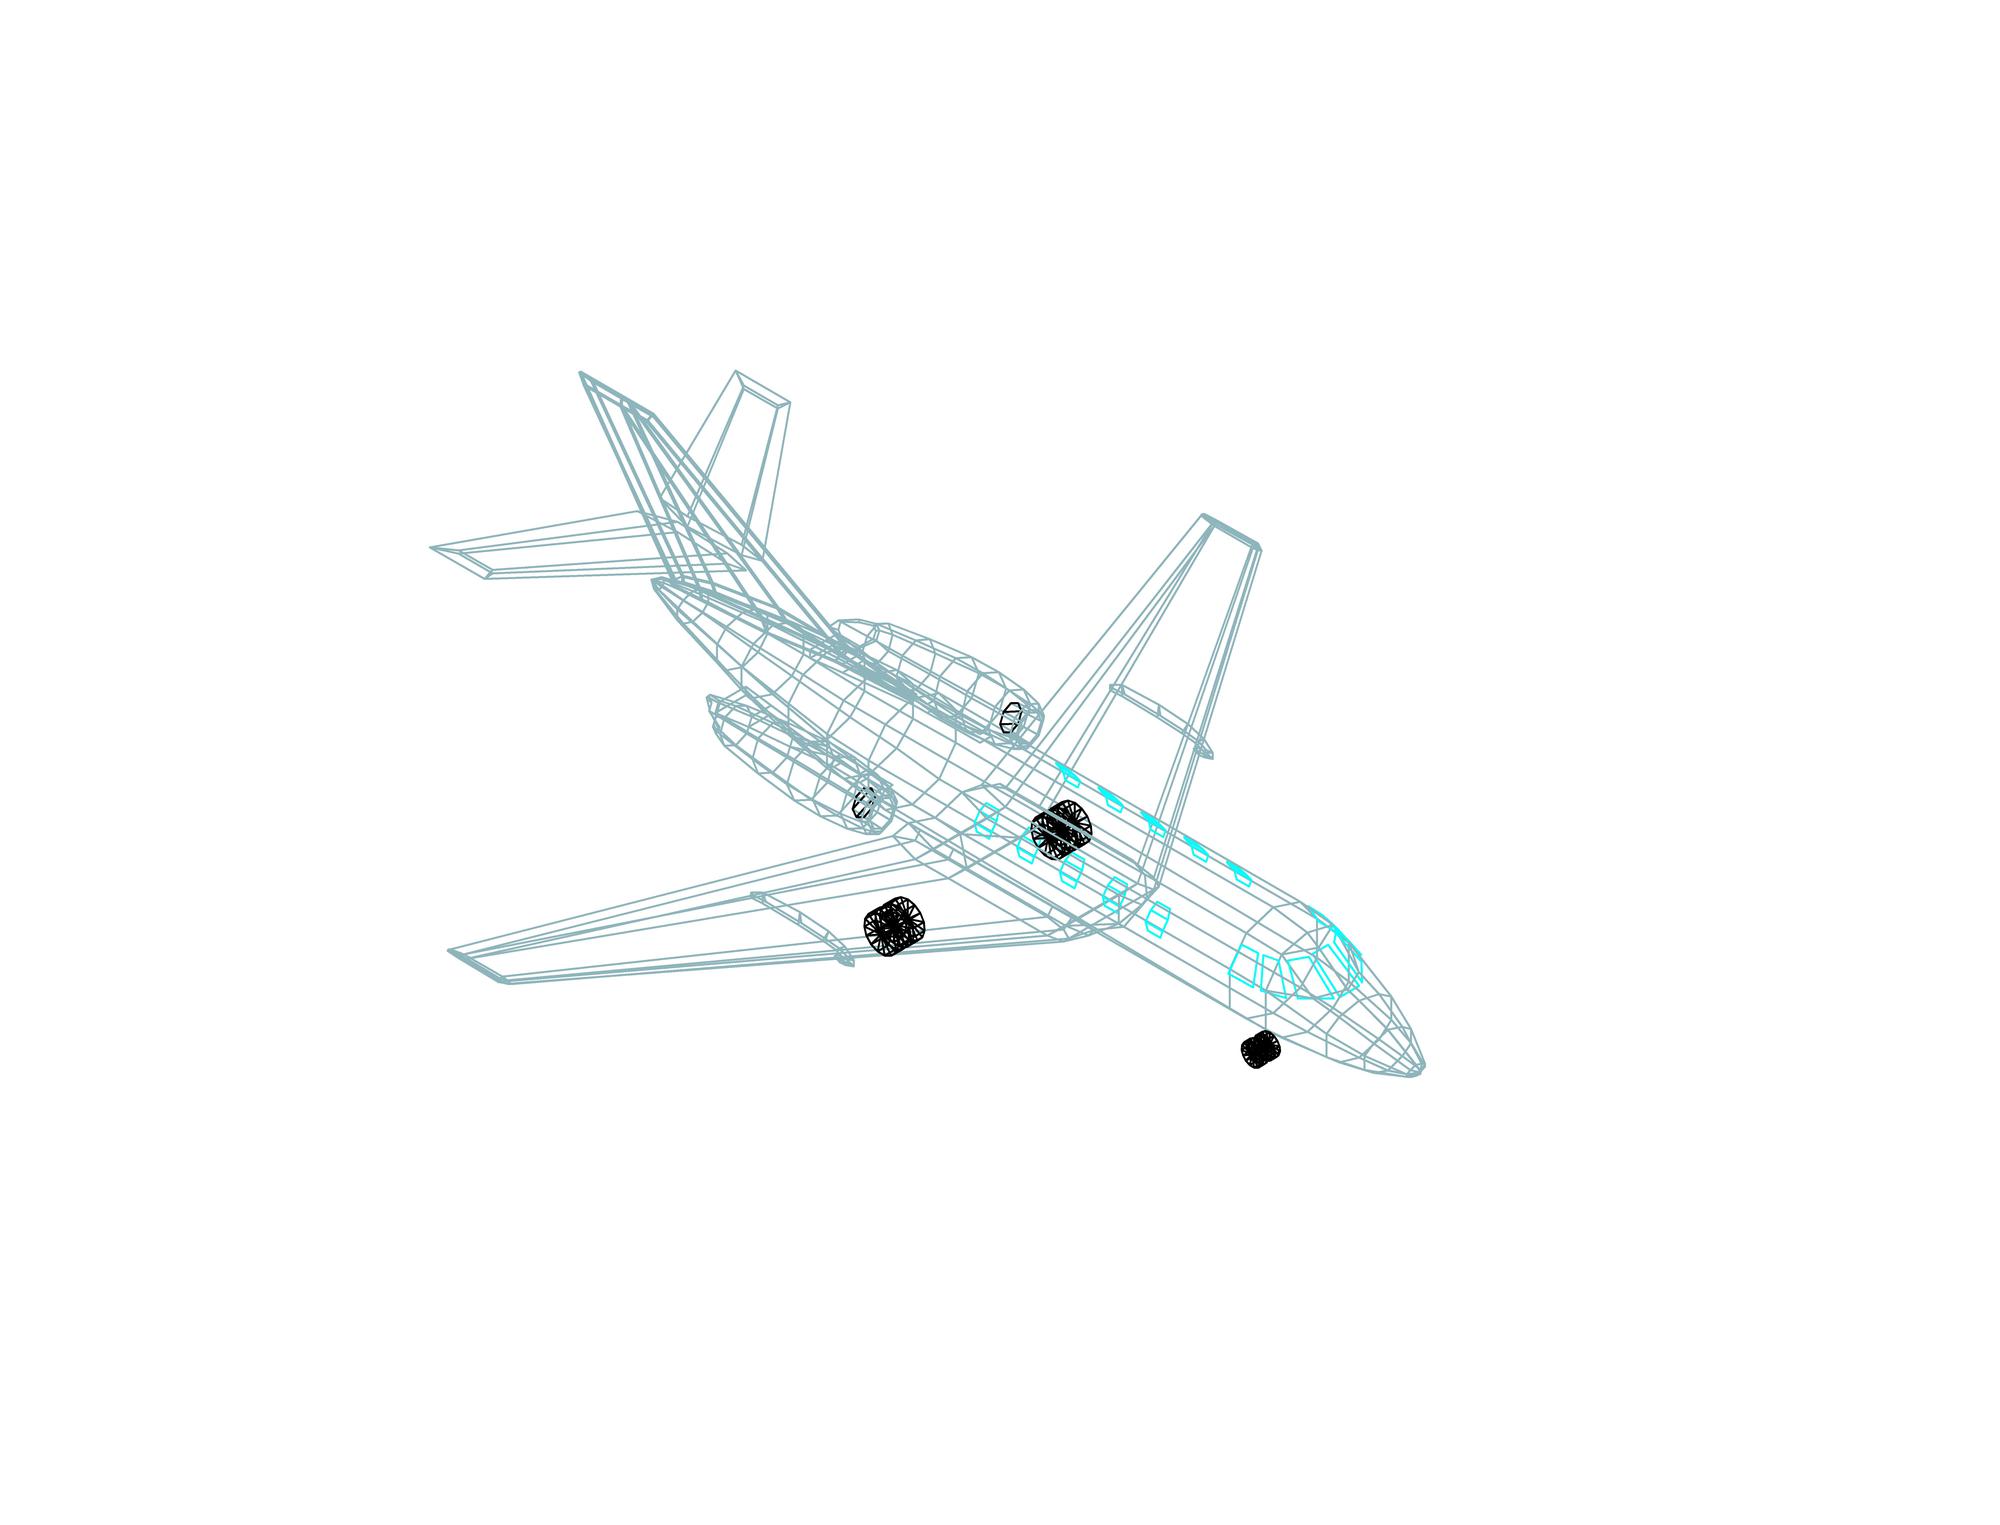 Airplane 7 3D dwg